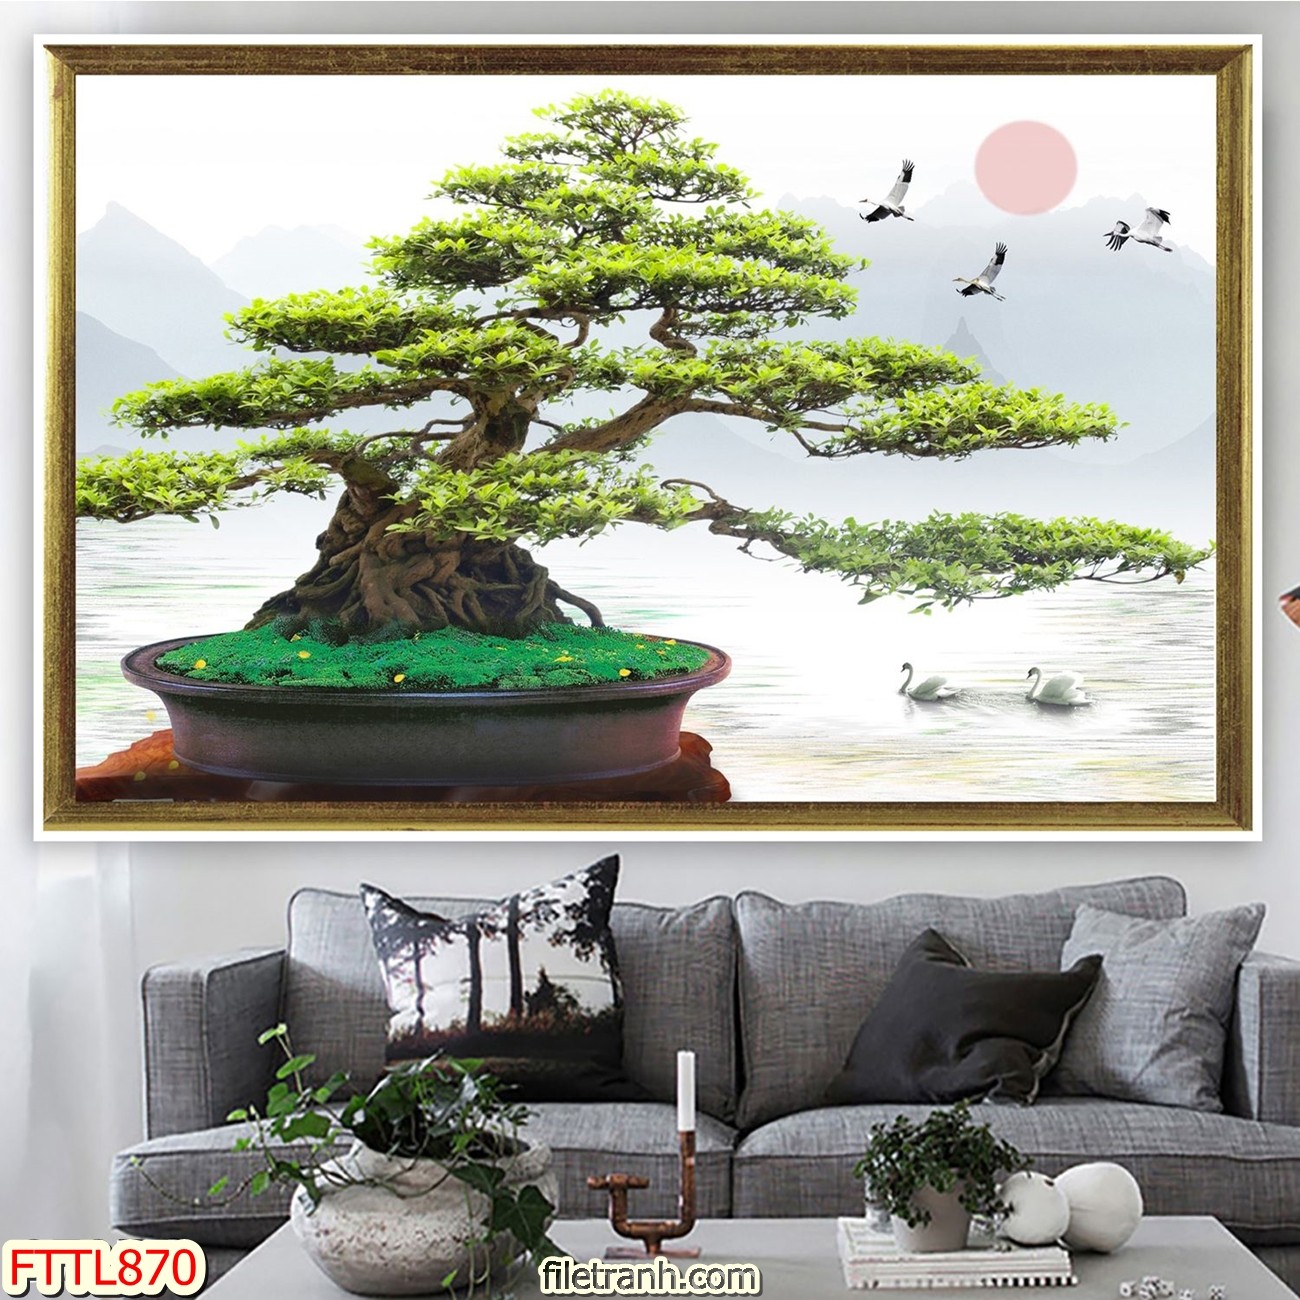 https://filetranh.com/file-tranh-chau-mai-bonsai/file-tranh-chau-mai-bonsai-fttl870.html